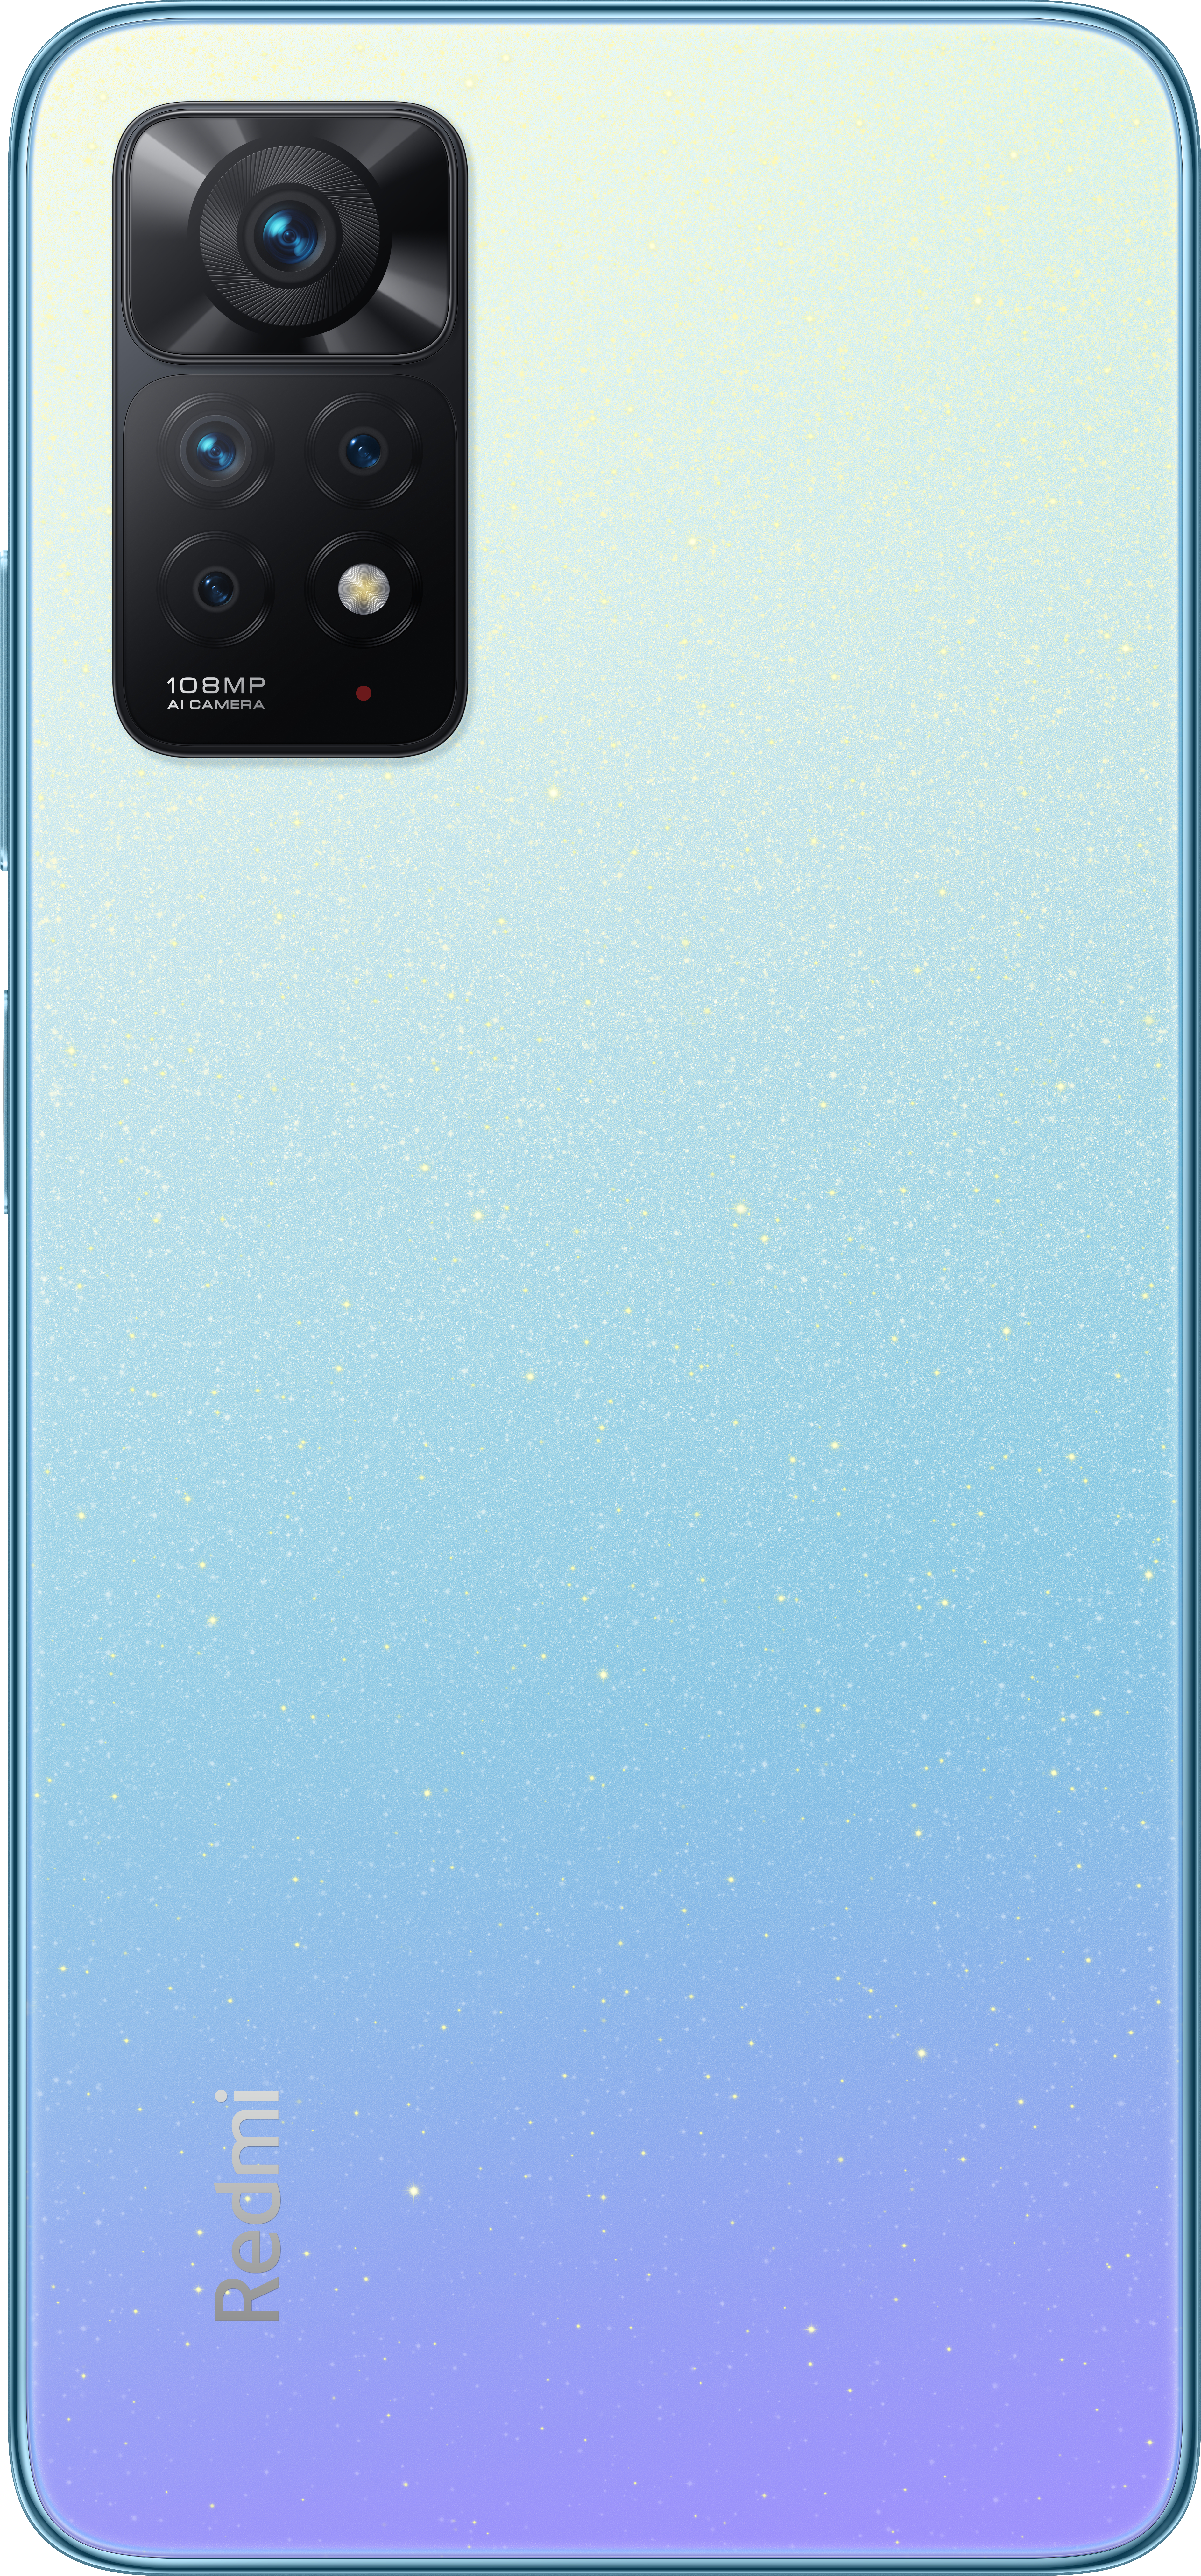 GB XIAOMI SIM 11 Star Blue Redmi Pro 128 Note Dual